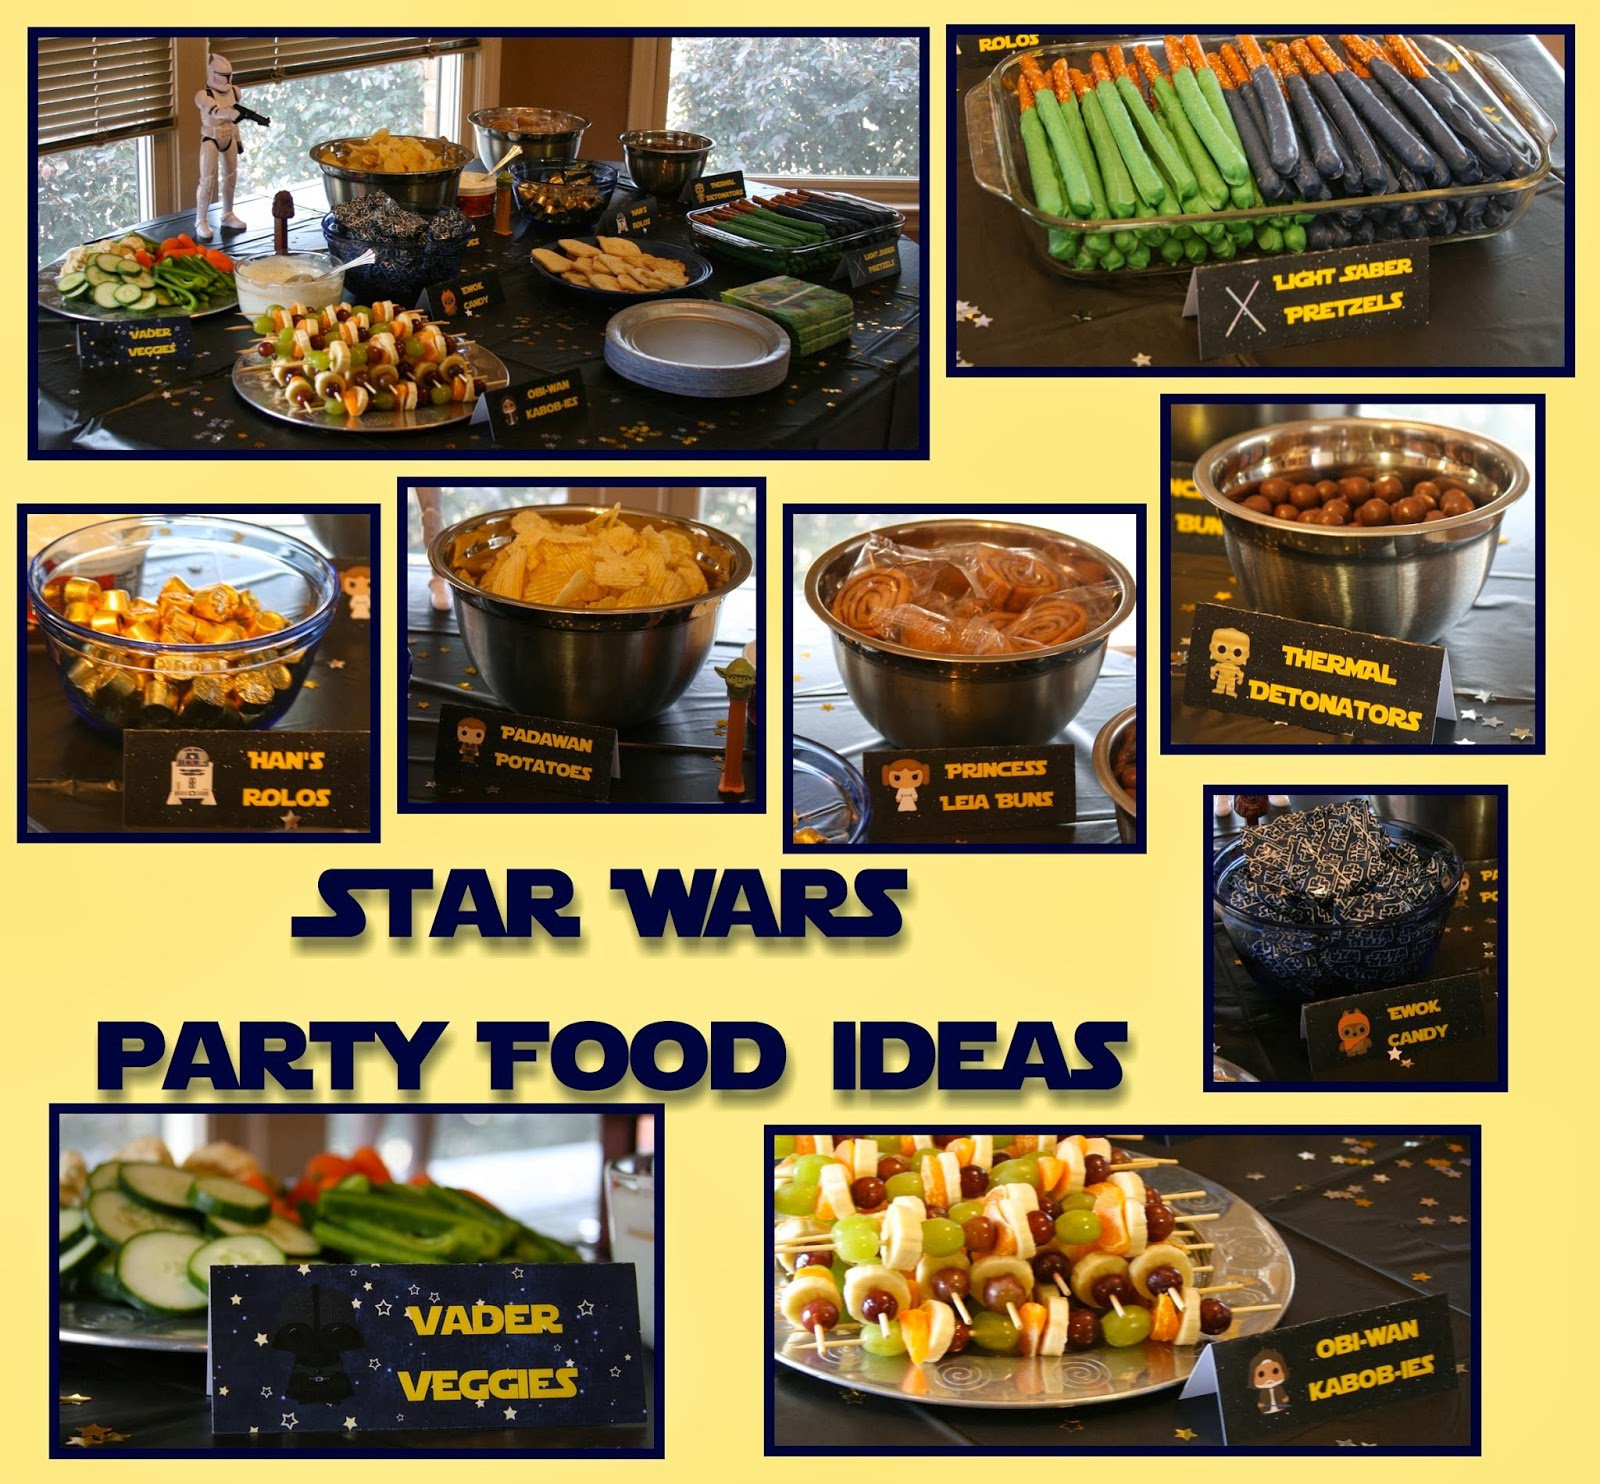 Star Wars Party Food Ideas
 Star Wars Birthday Food Ideas